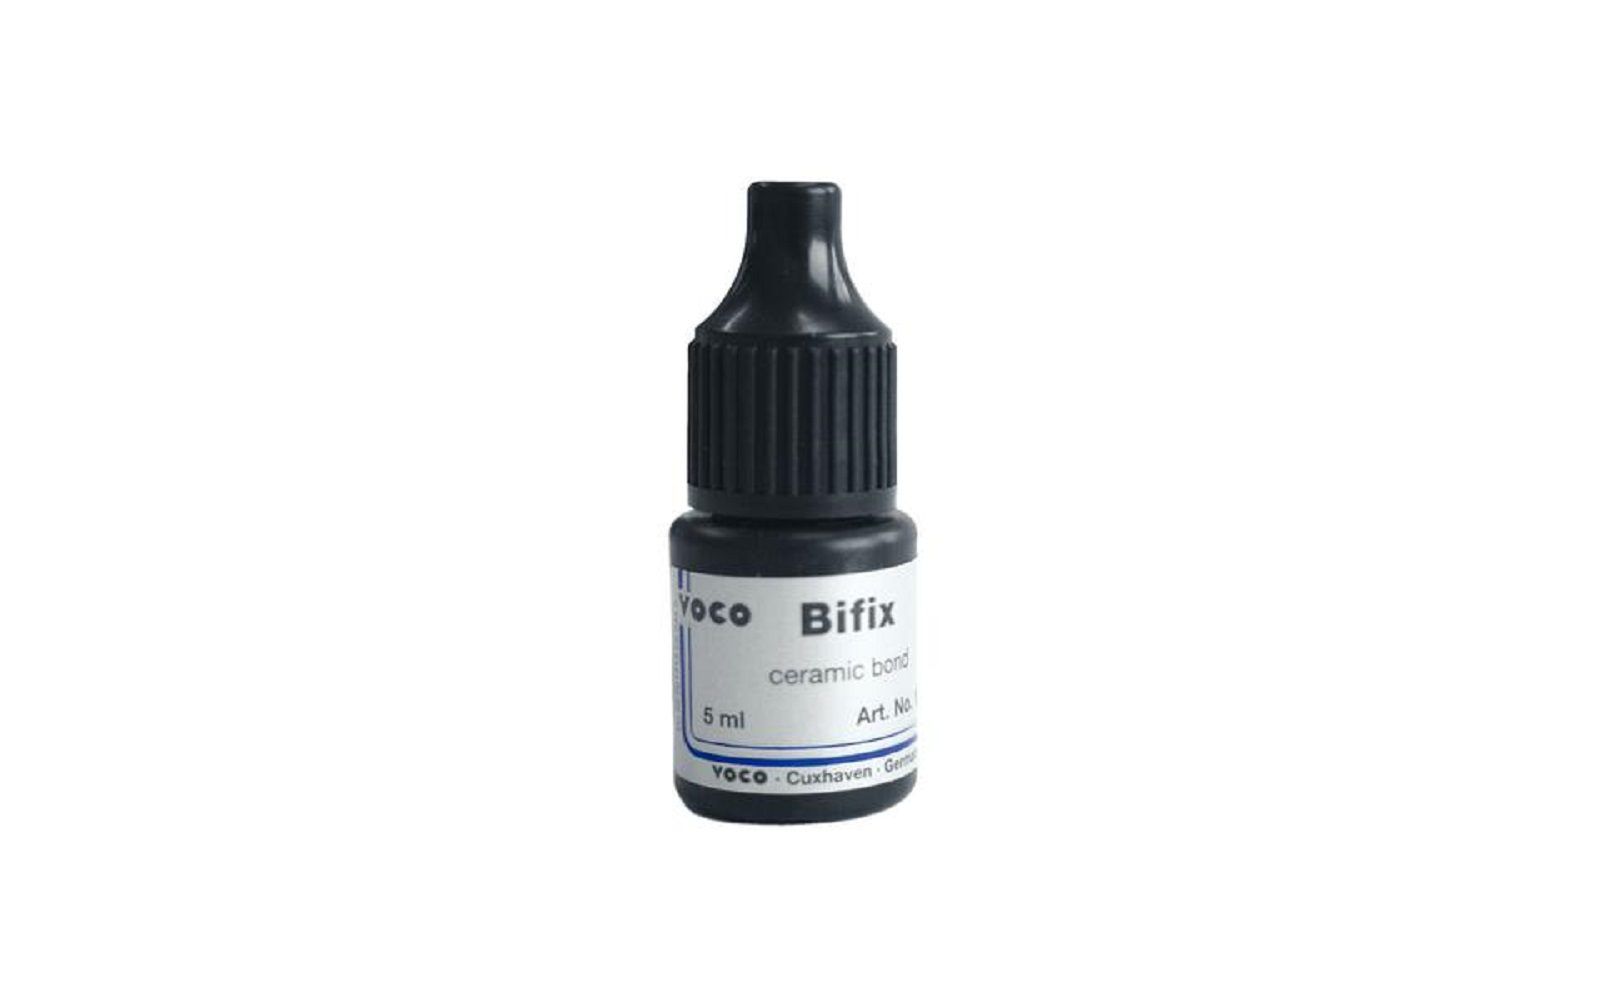 Bifix ceramic bond – silane, quickmix, 5 ml bottle refill